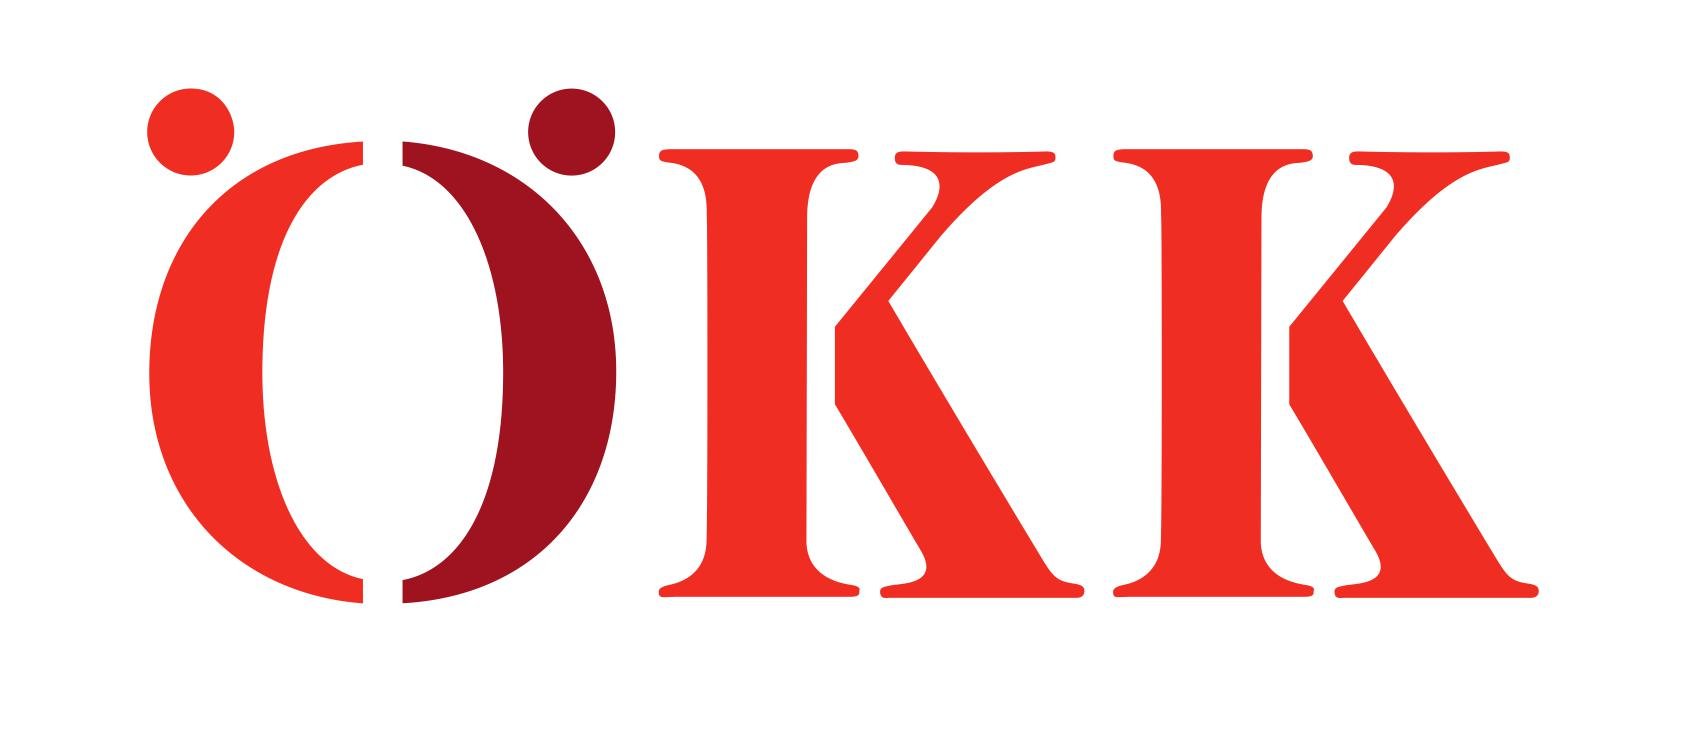 oekk_logo_ohne_claim_CMYK-1.jpg